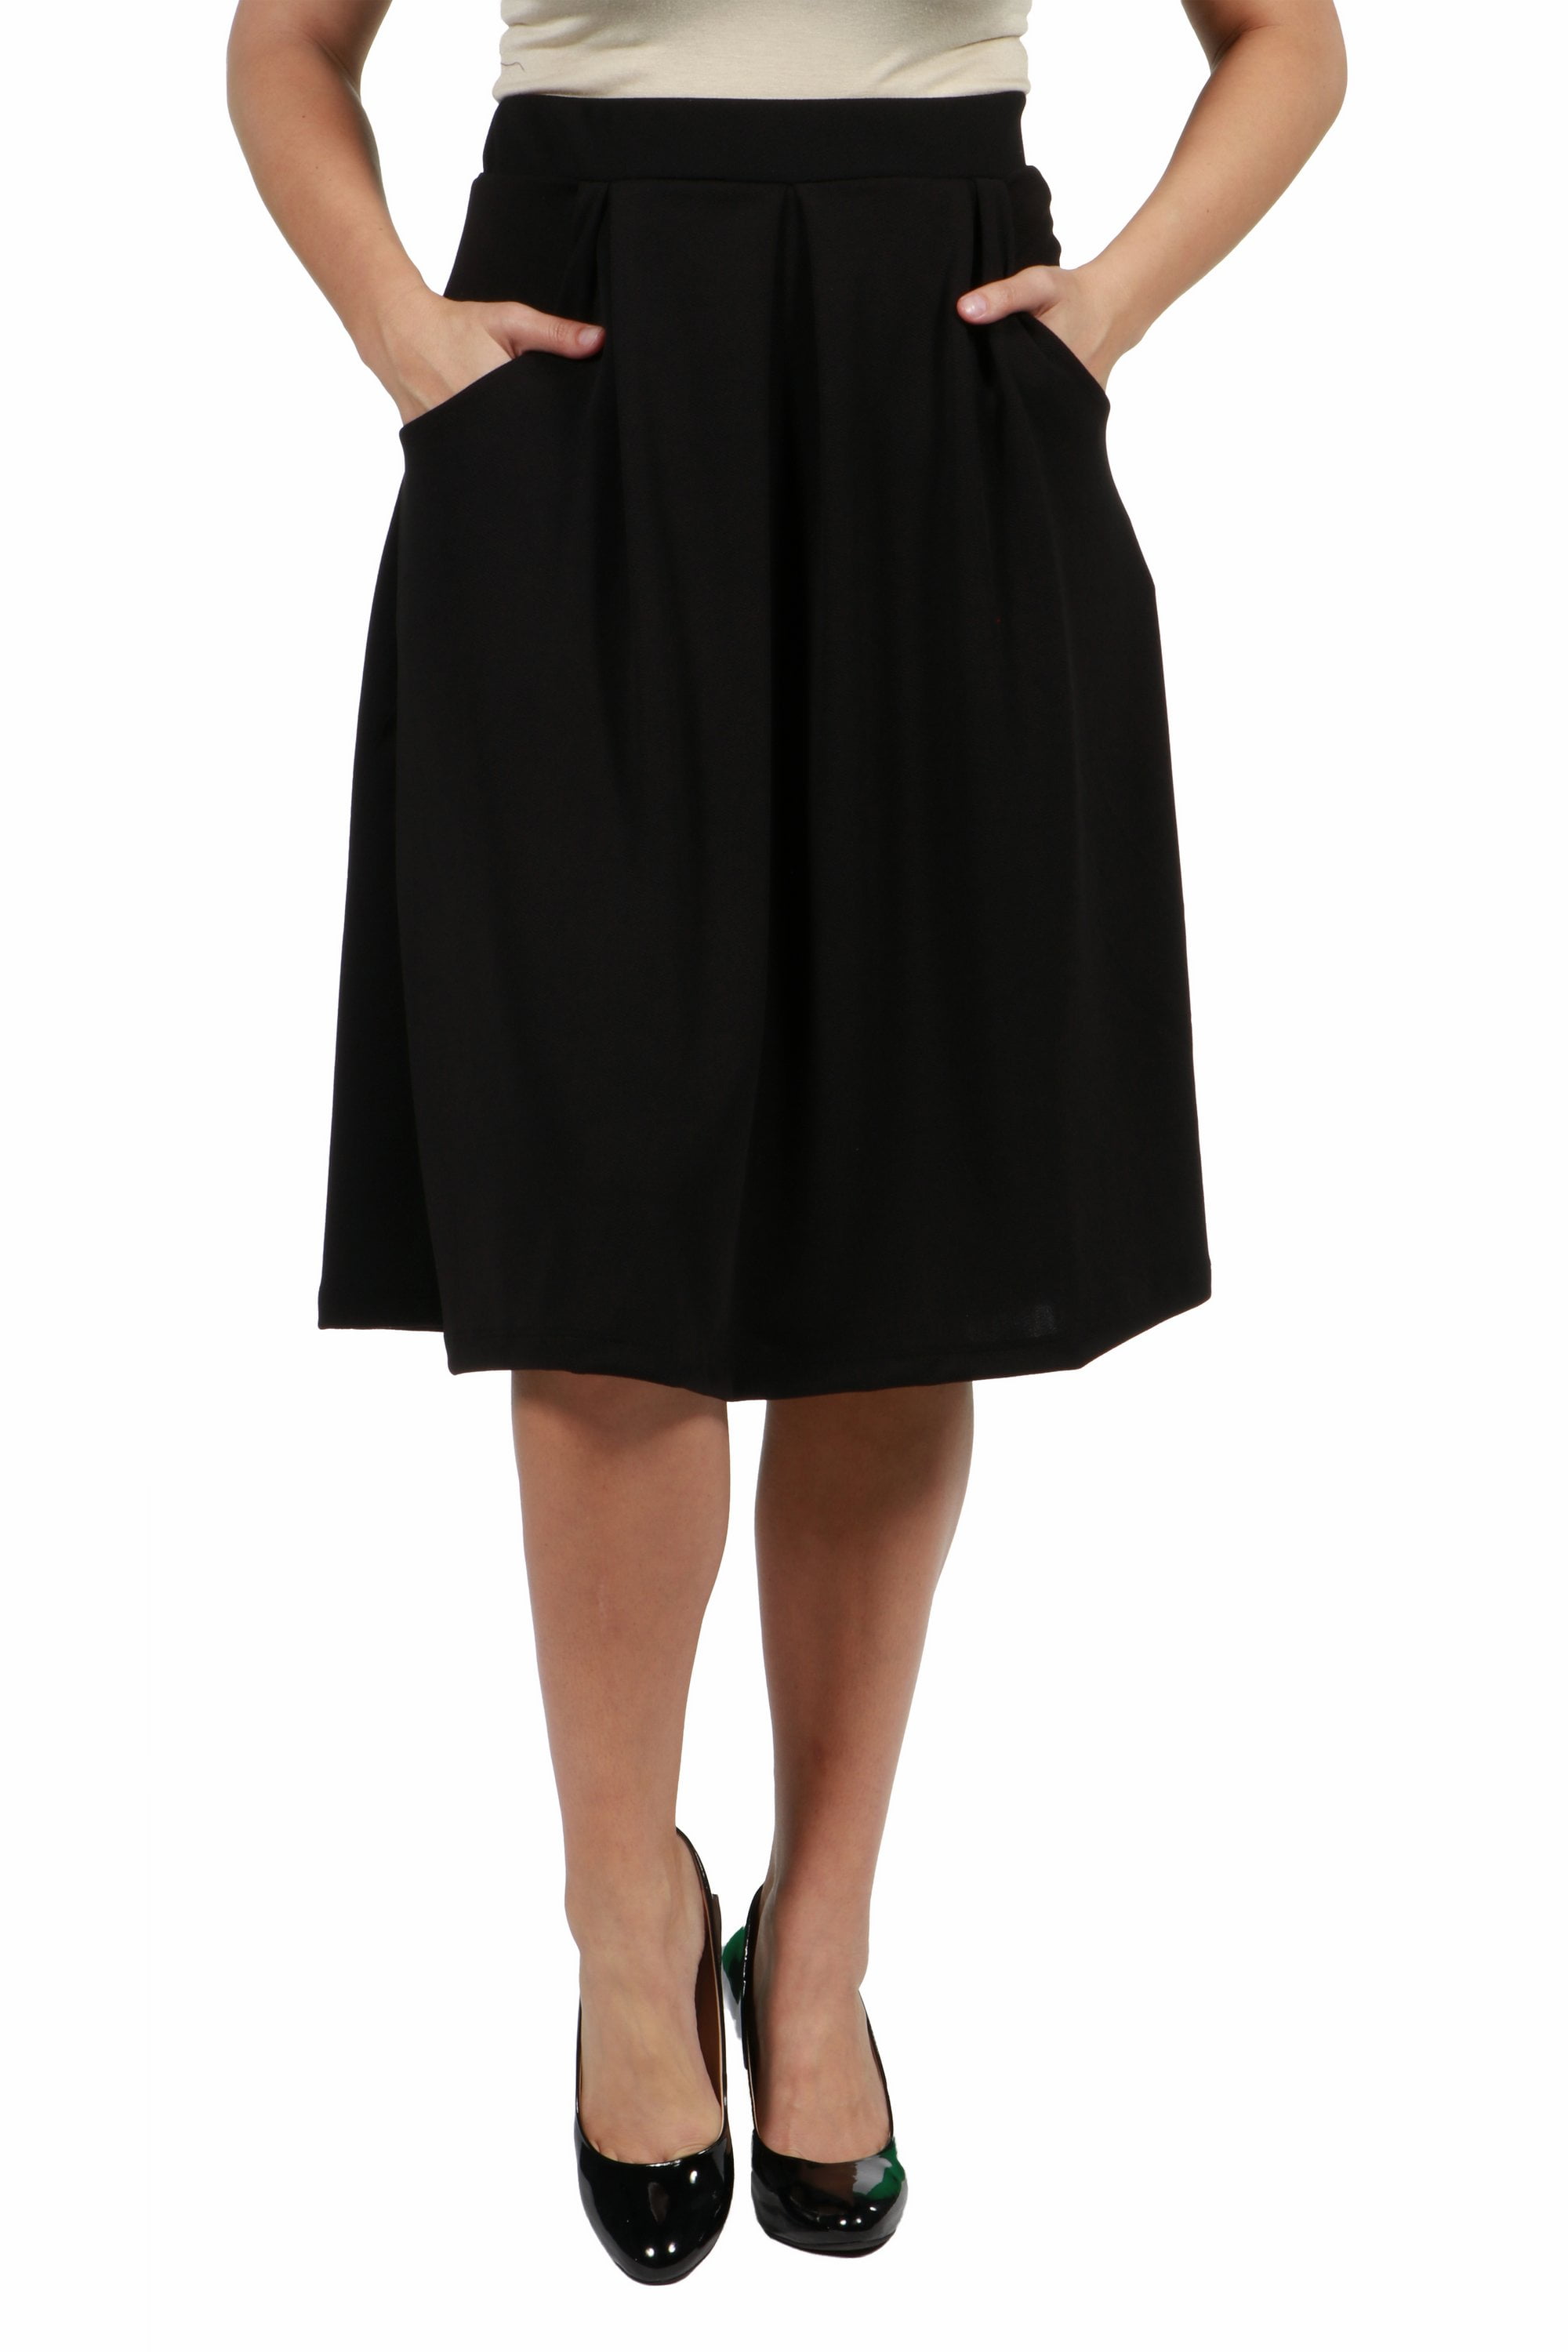 24/7 Plus Size Comfort Apparel Classic Plus Size Knee Length Black Skirt With Pockets - Walmart.com